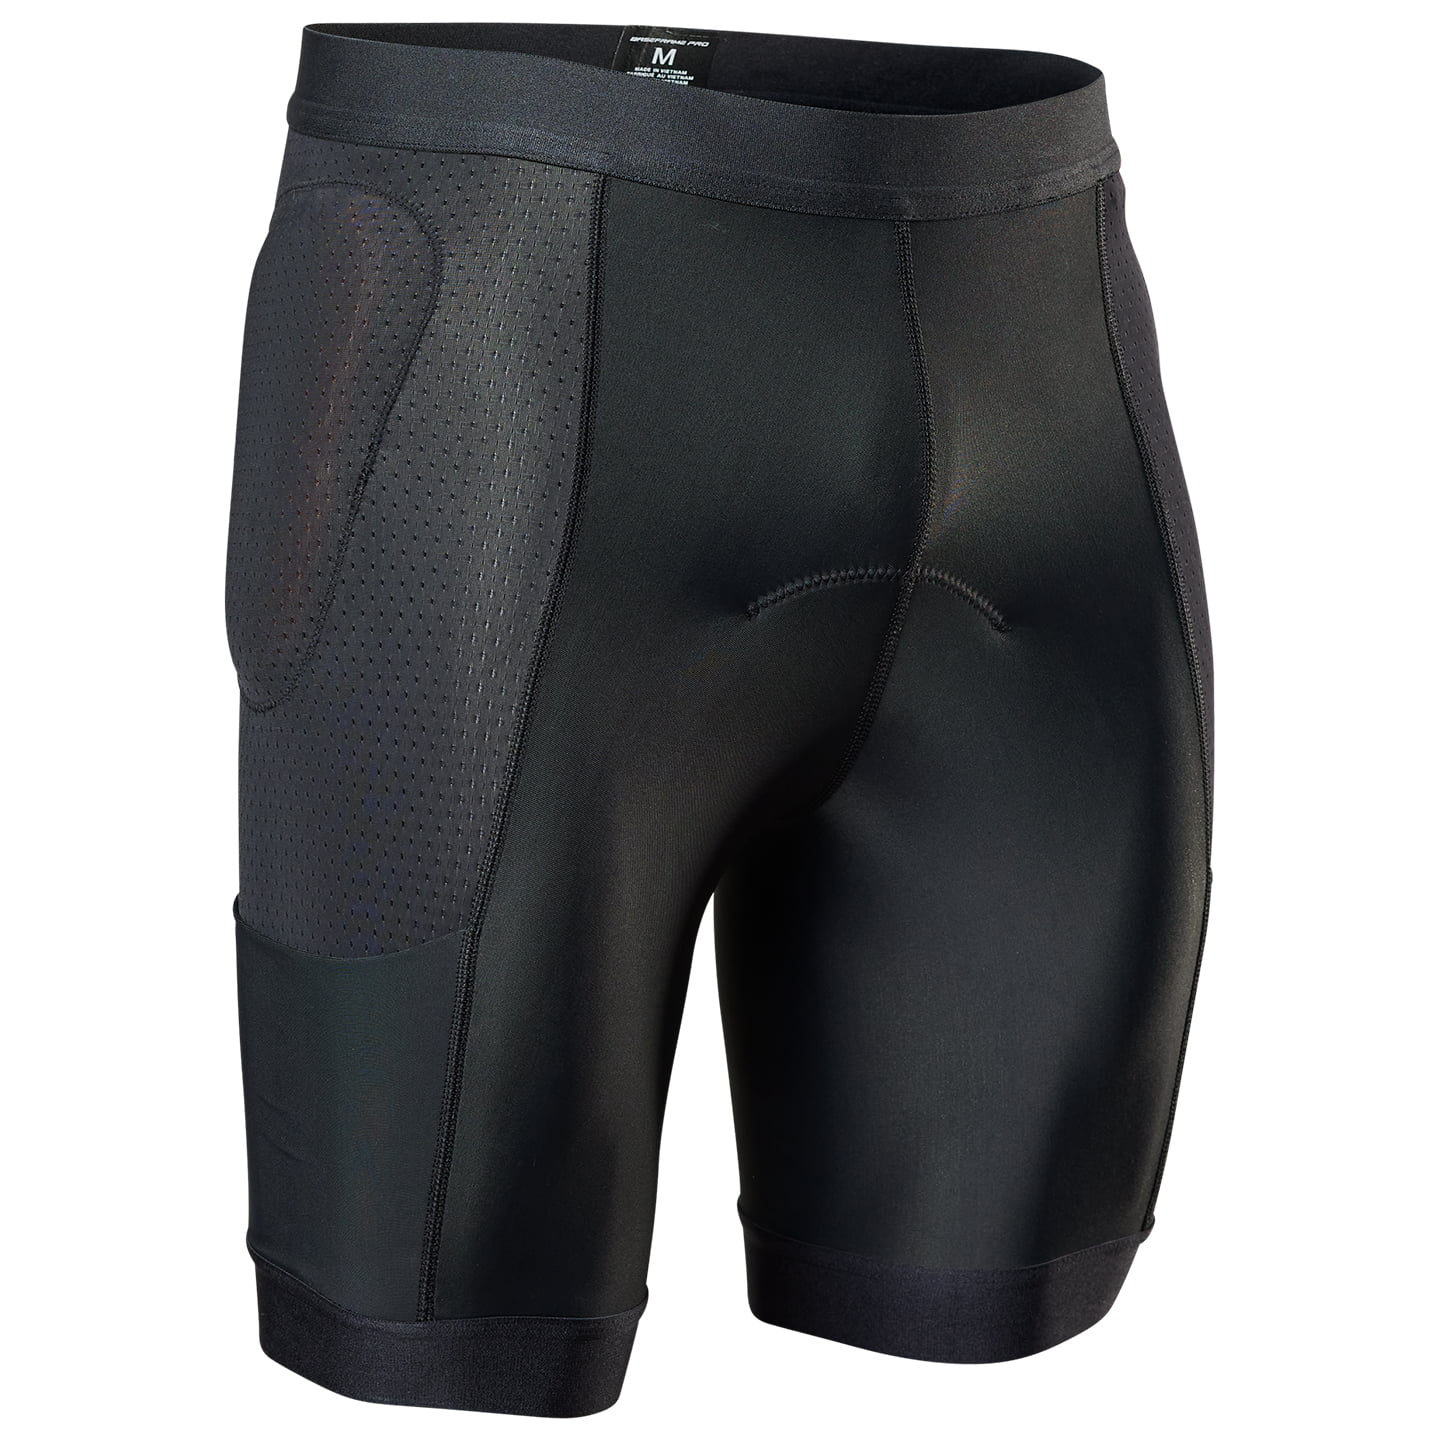 FOX Liner Shorts Baseframe Pro, for men, size S, Briefs, Bike gear